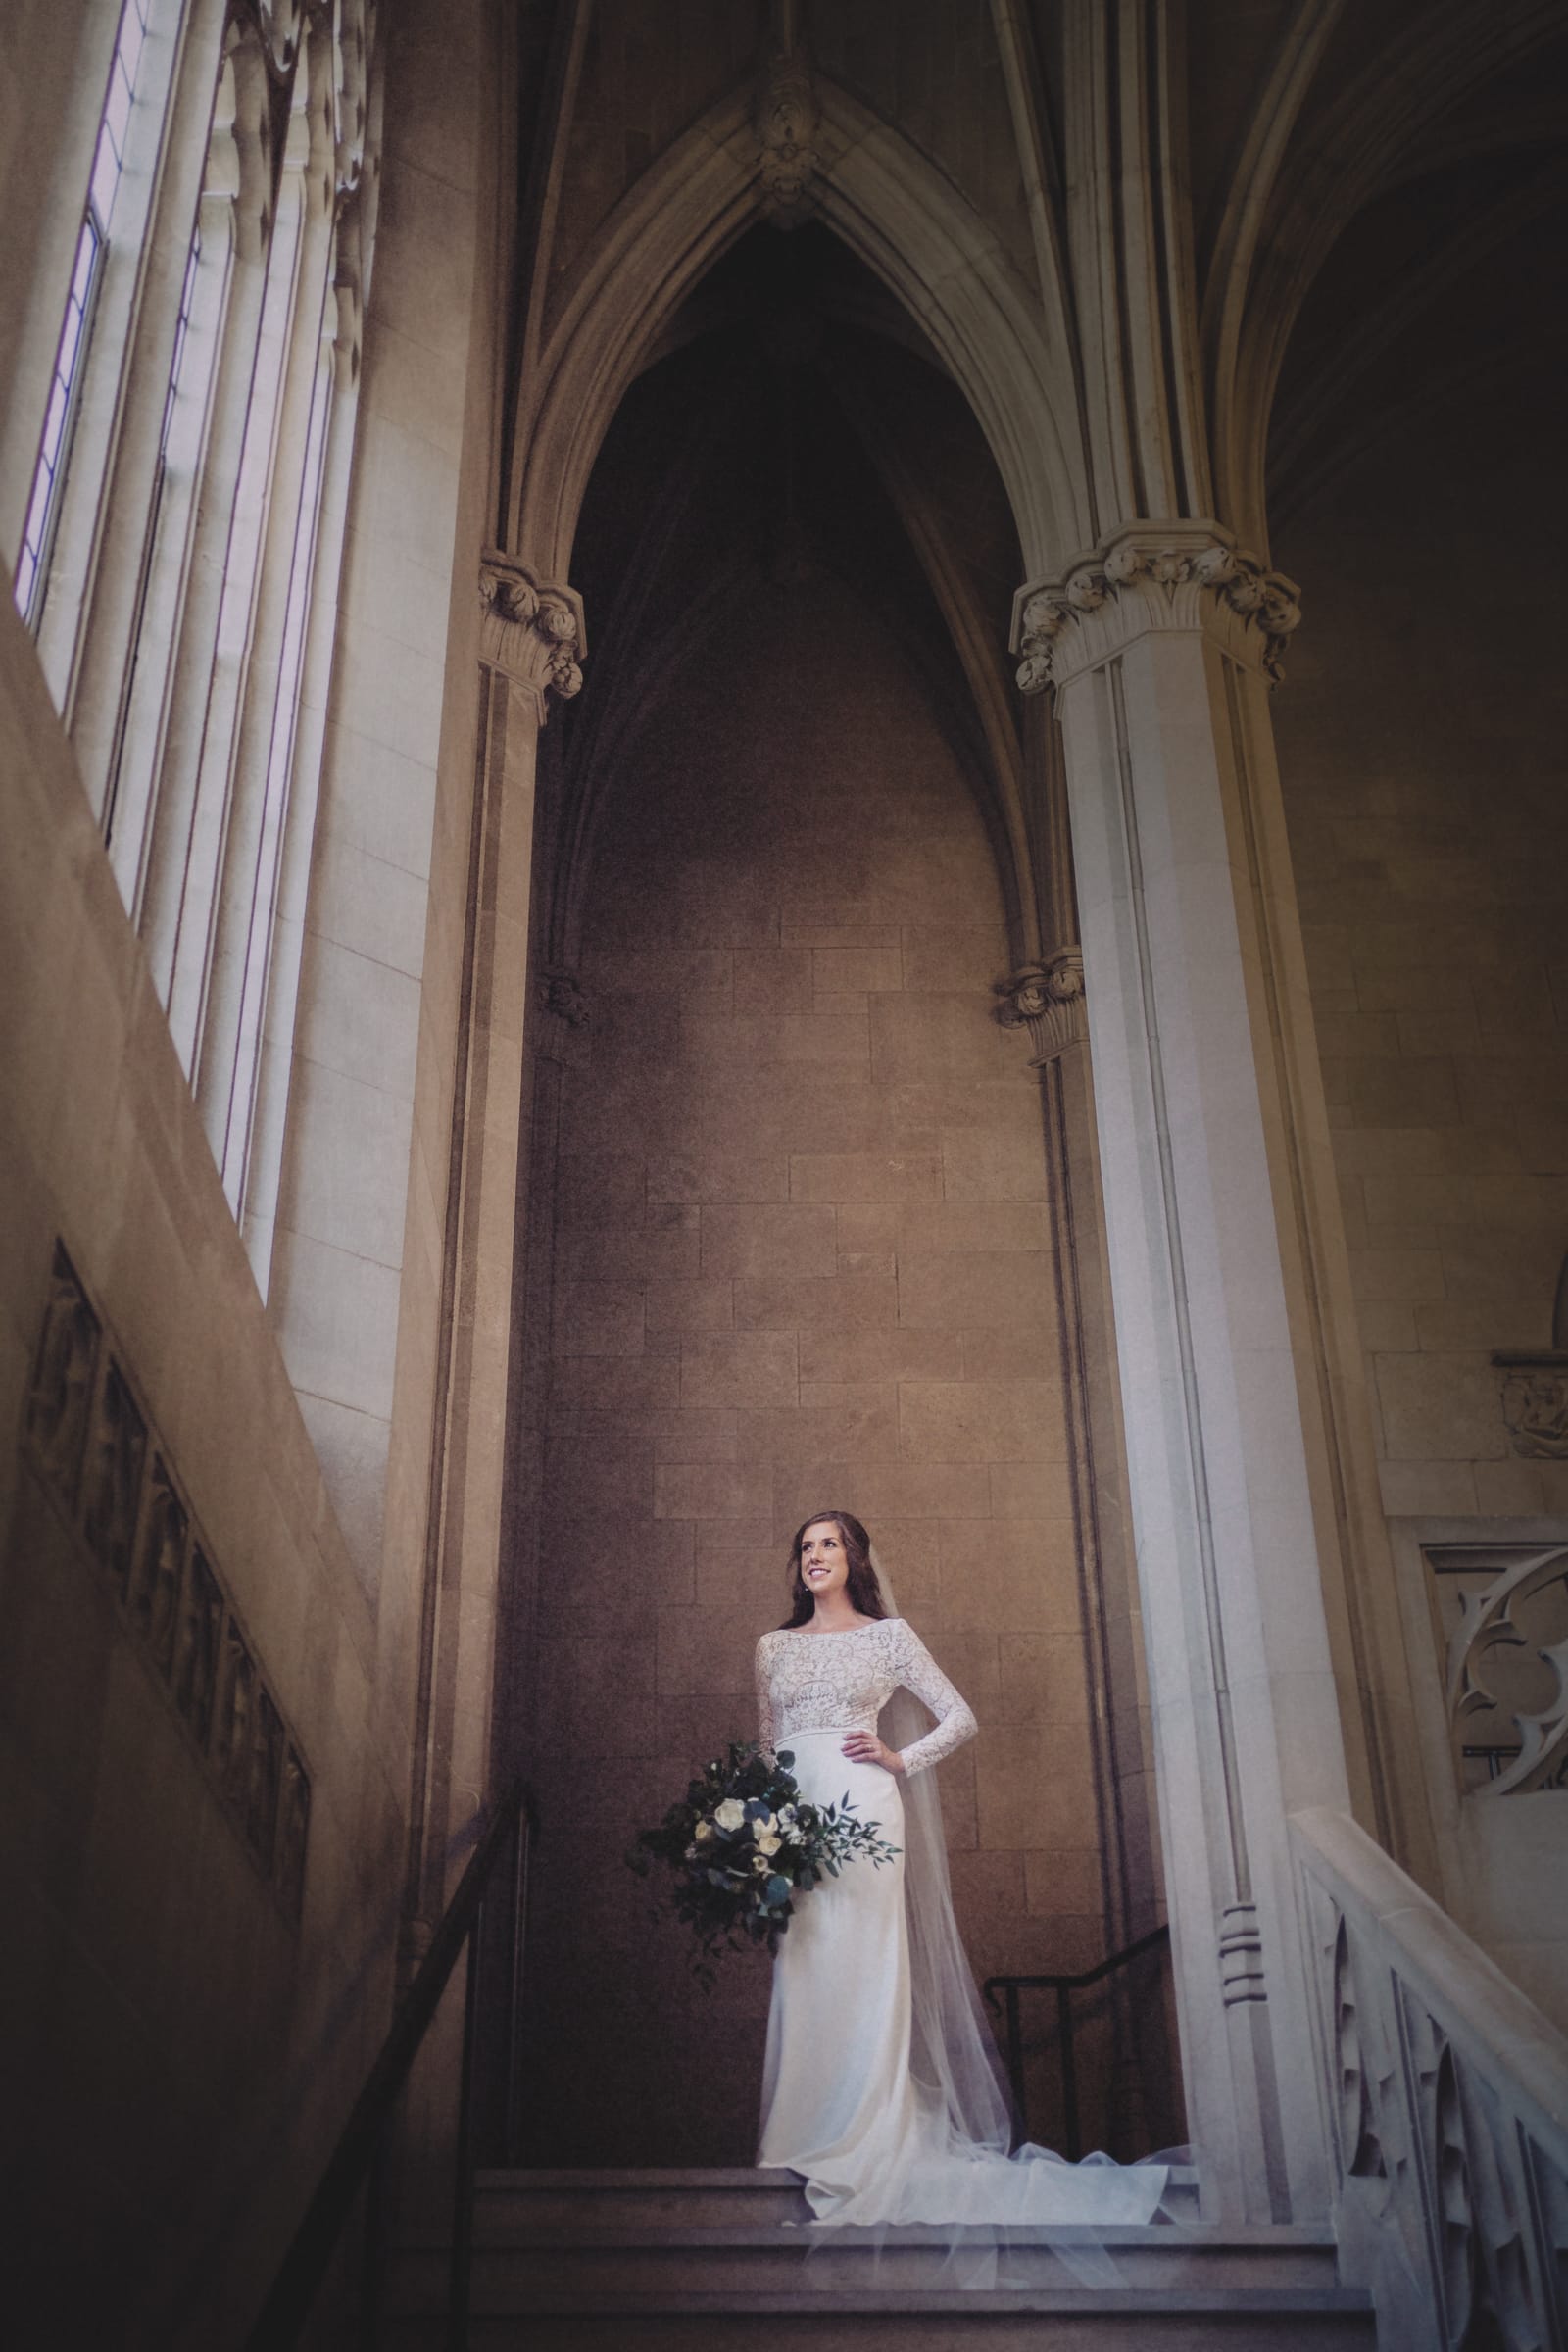 Duke Chapel Wedding Photo - Bride on Stairs